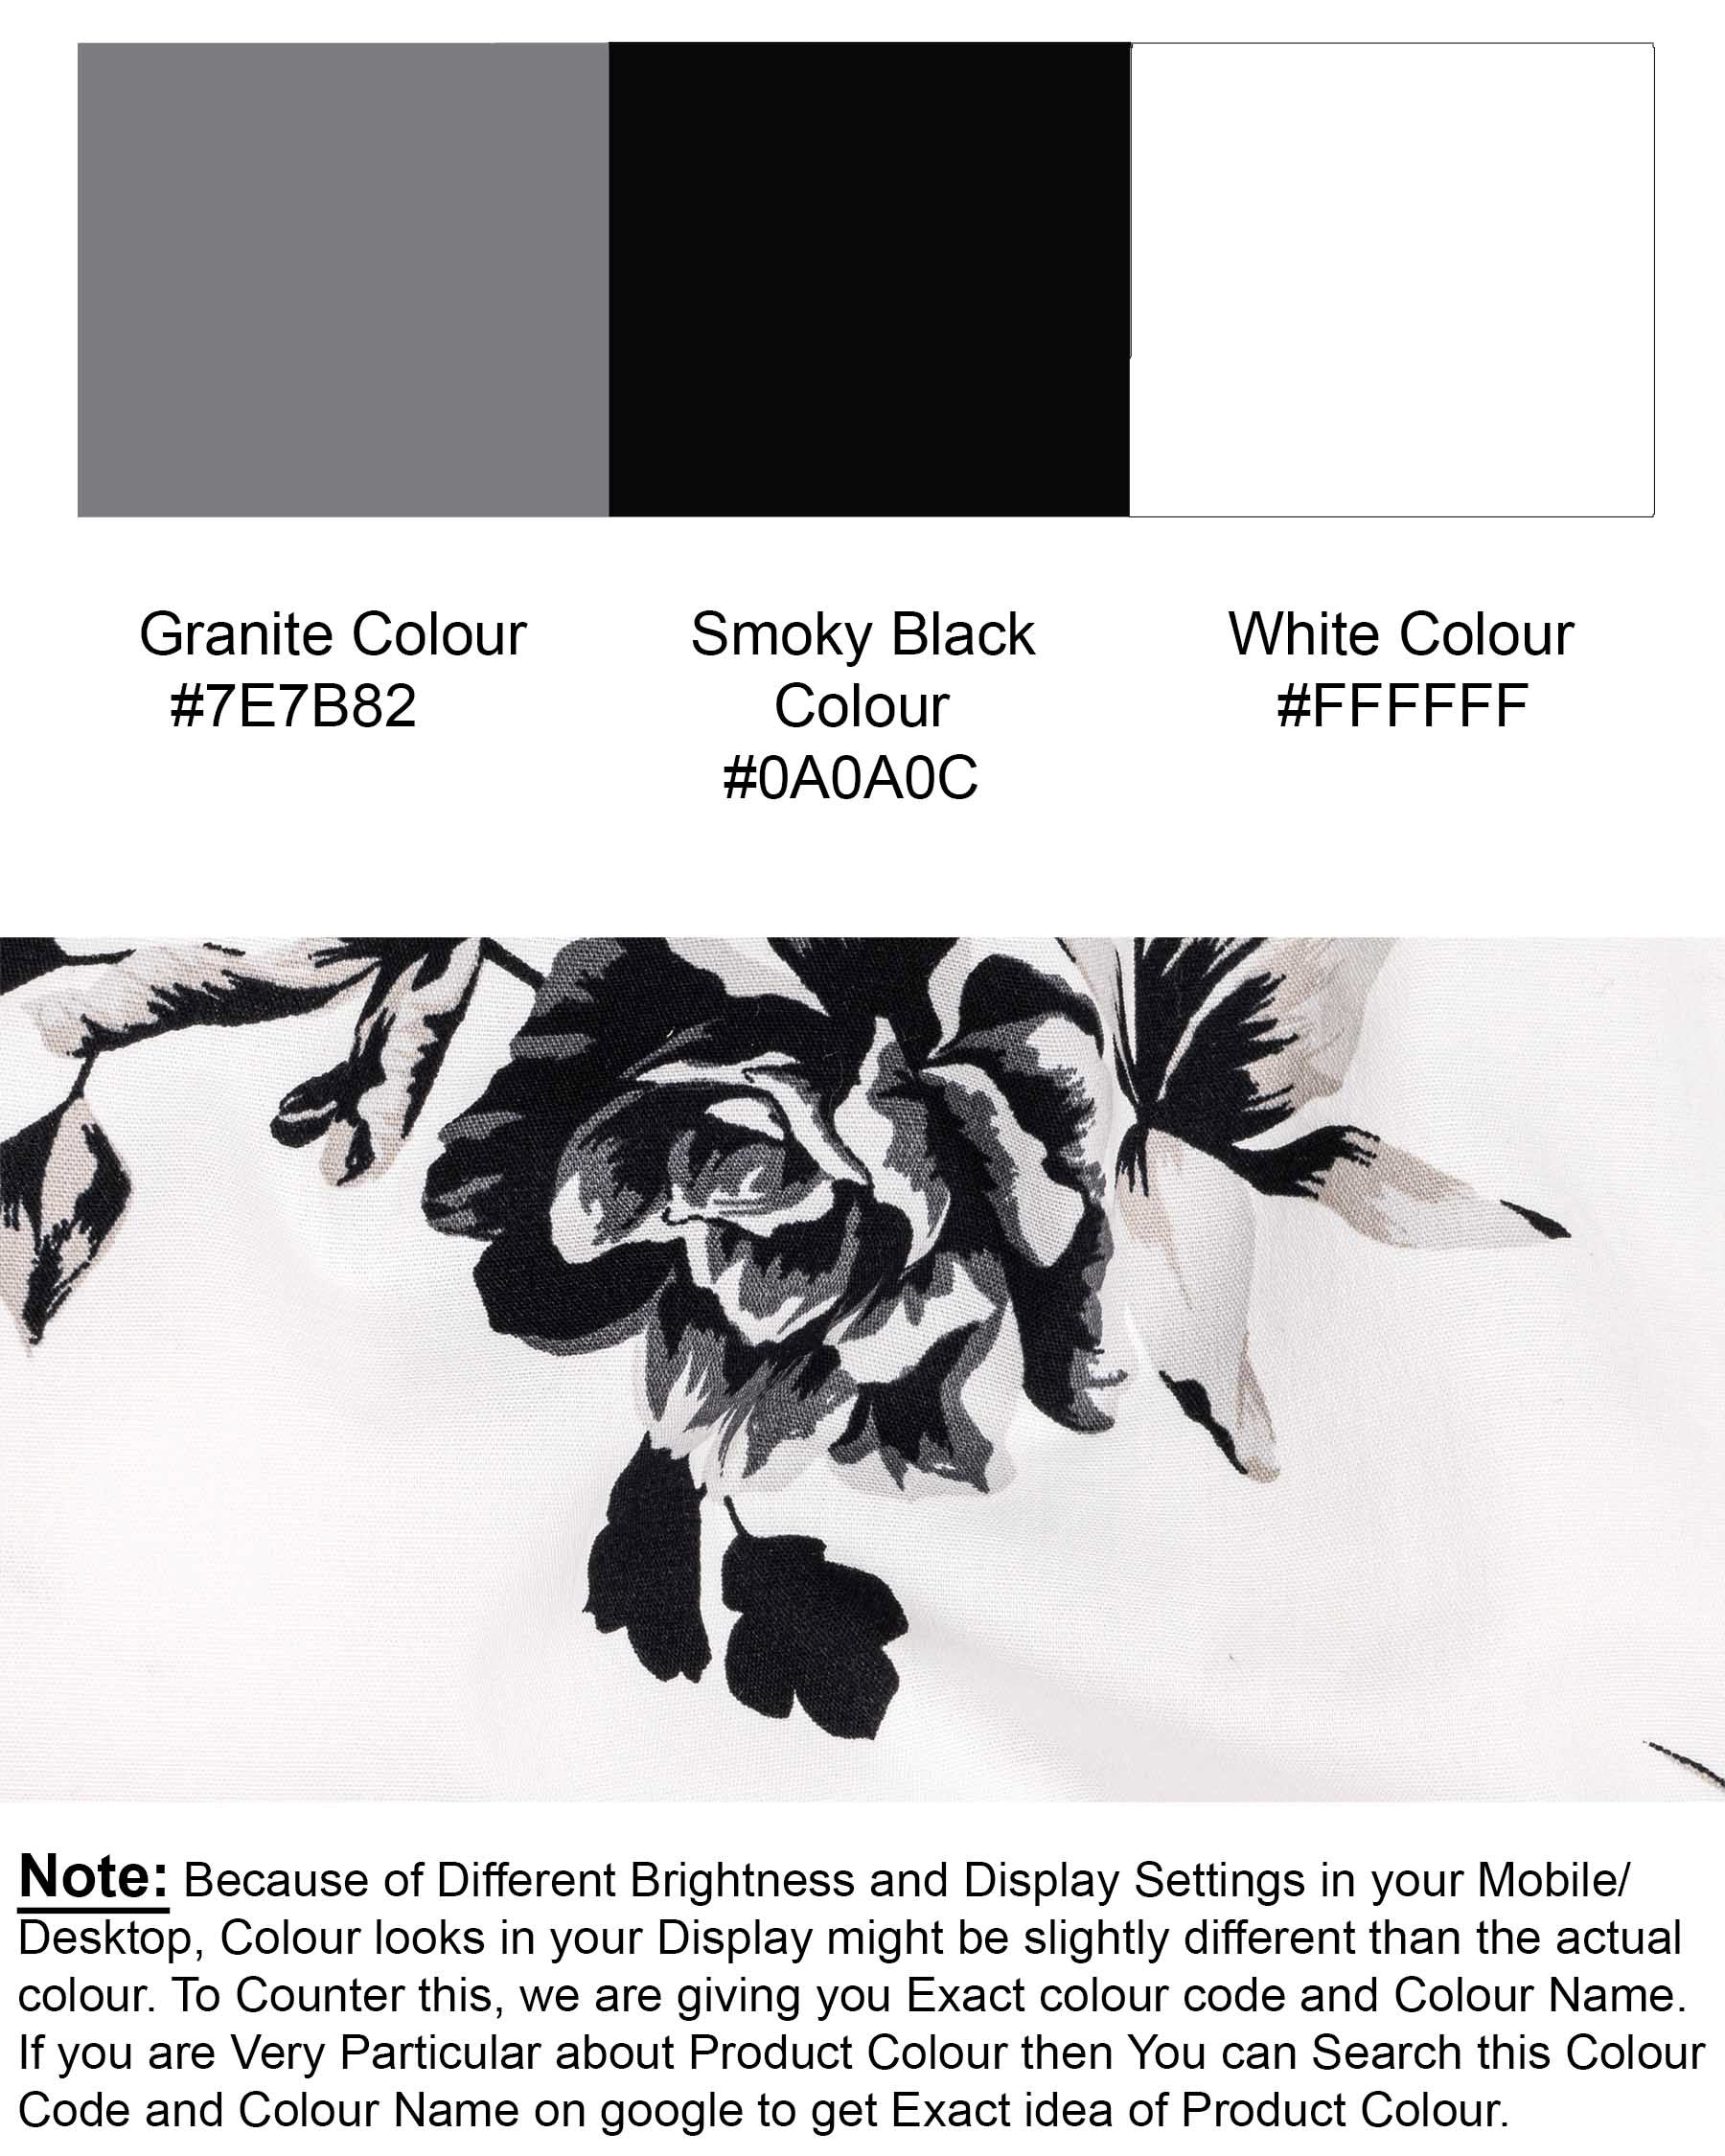 Bright White Floral Printed Twill Textured Premium Cotton Shirt 6513-BLK-38, 6513-BLK-H-38, 6513-BLK-39, 6513-BLK-H-39, 6513-BLK-40, 6513-BLK-H-40, 6513-BLK-42, 6513-BLK-H-42, 6513-BLK-44, 6513-BLK-H-44, 6513-BLK-46, 6513-BLK-H-46, 6513-BLK-48, 6513-BLK-H-48, 6513-BLK-50, 6513-BLK-H-50, 6513-BLK-52, 6513-BLK-H-52